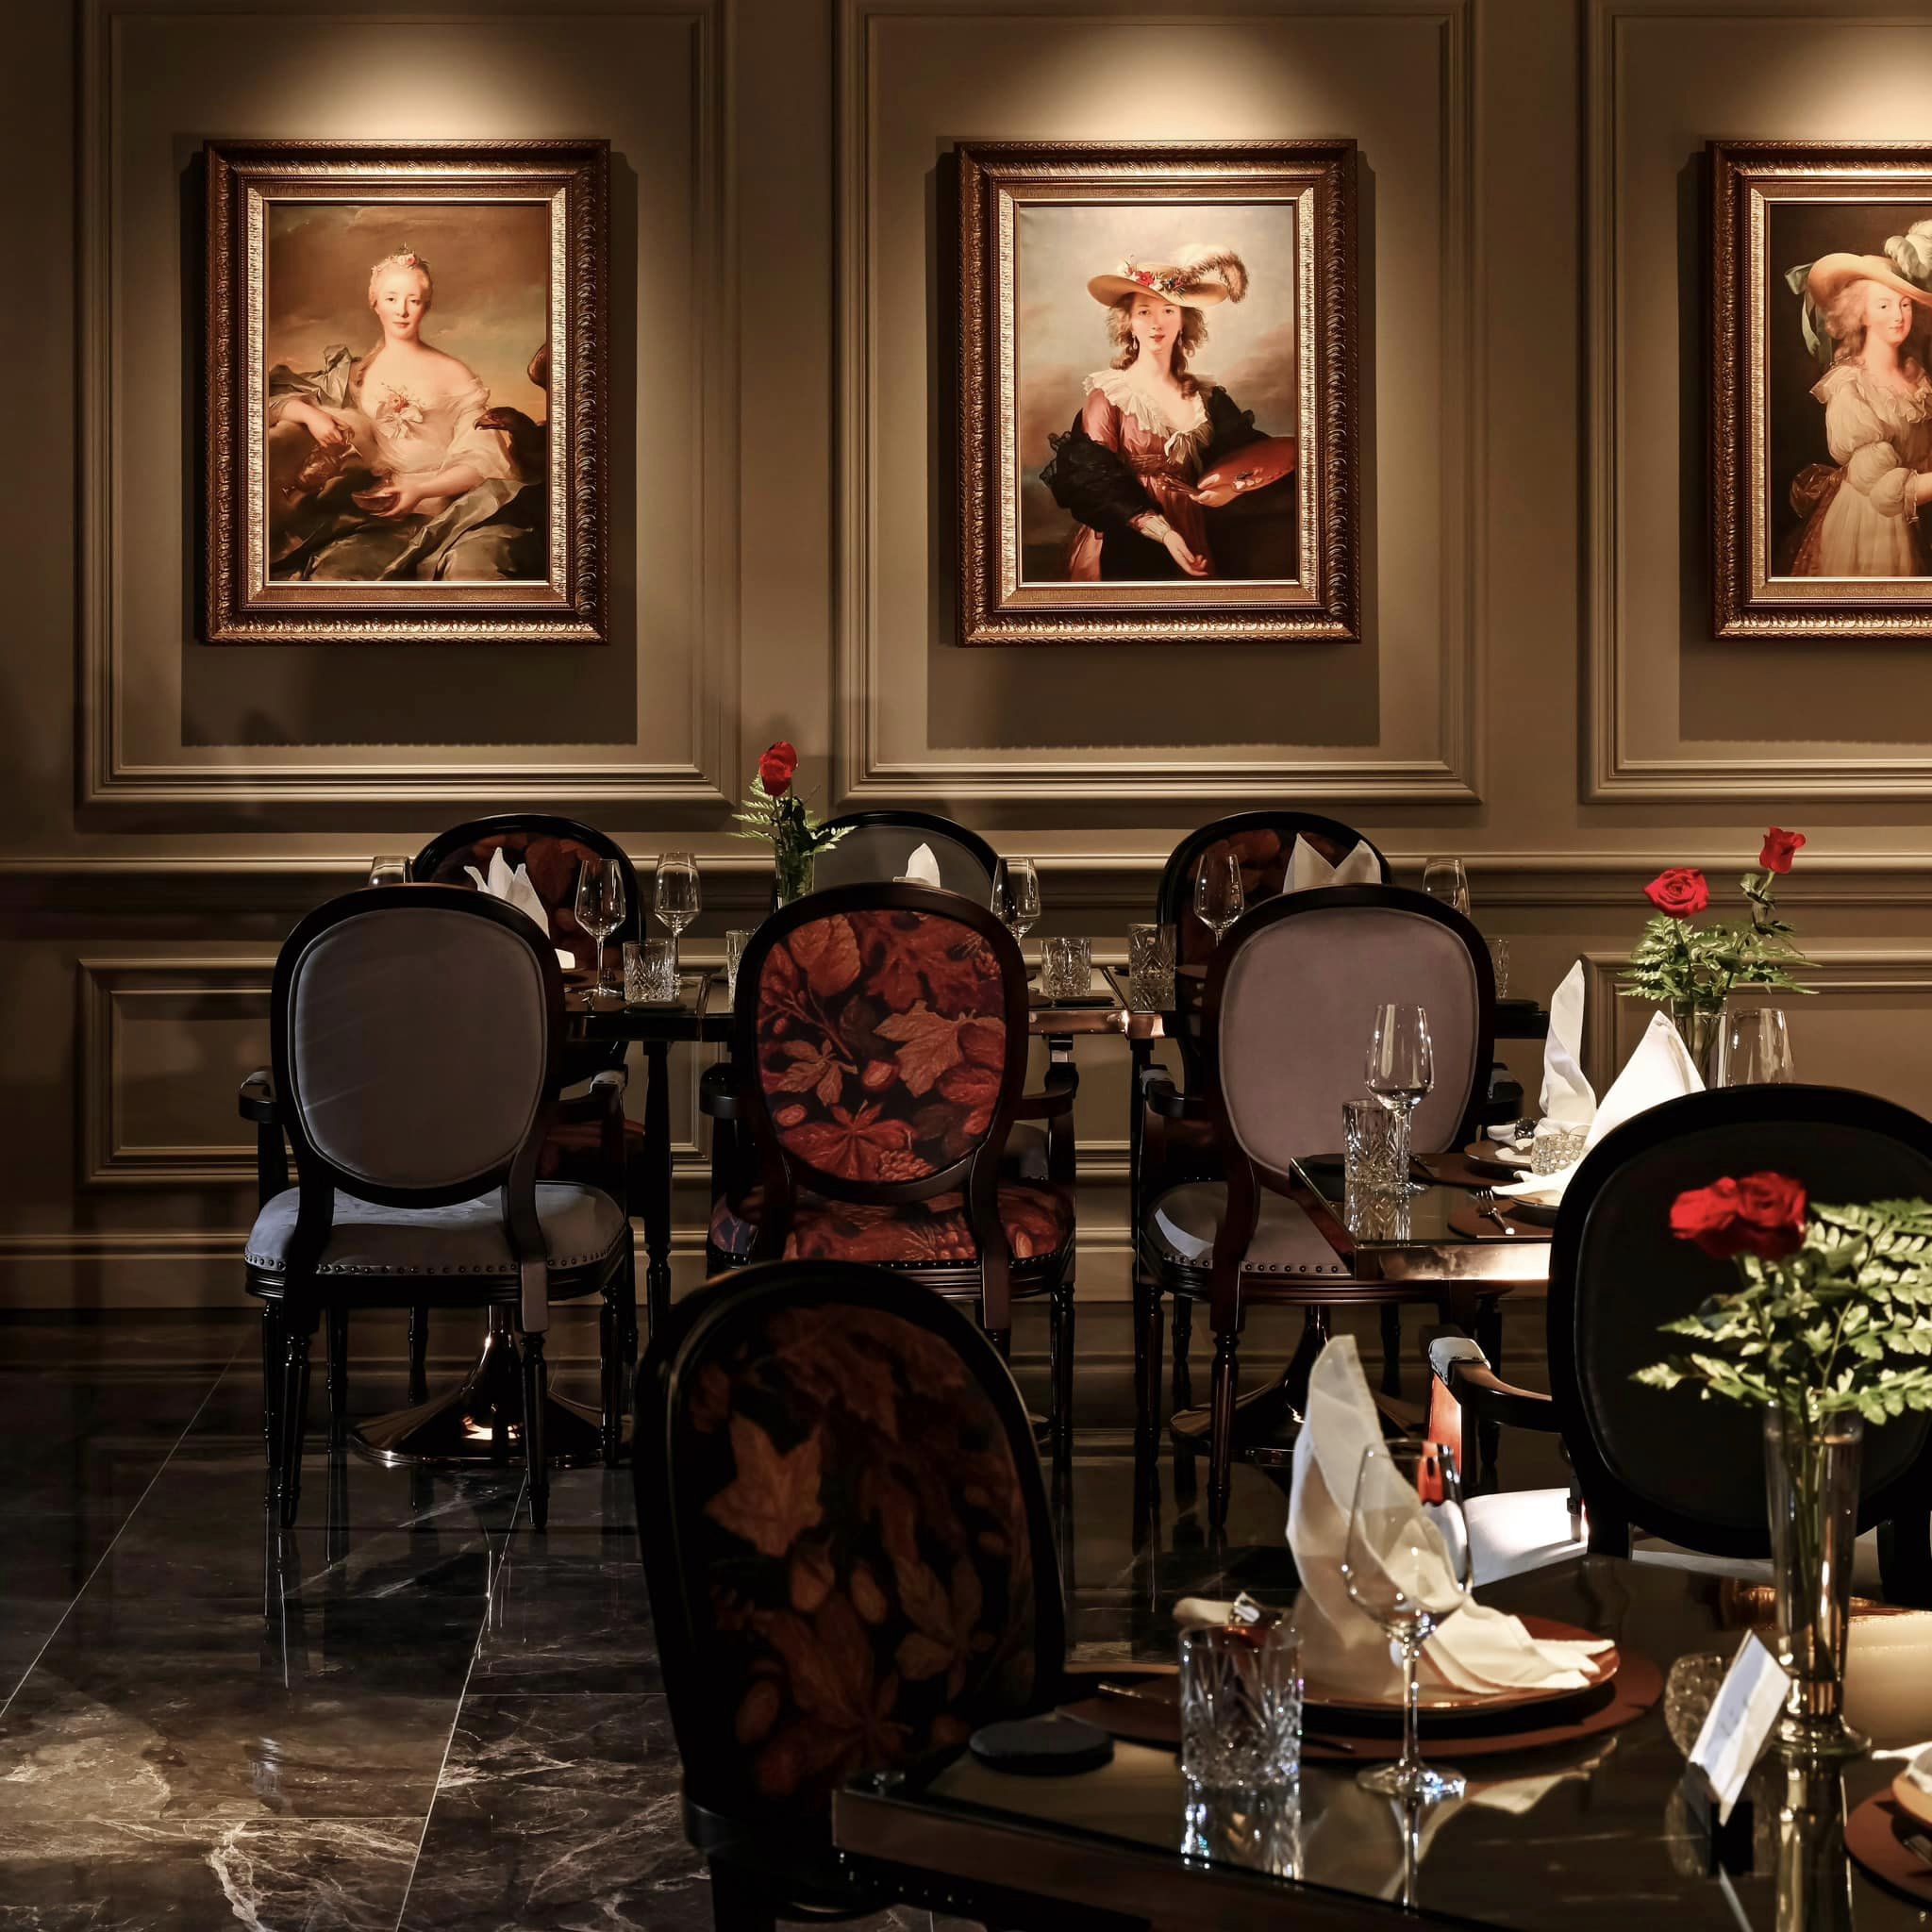 The luxurious interior design of Le Palais